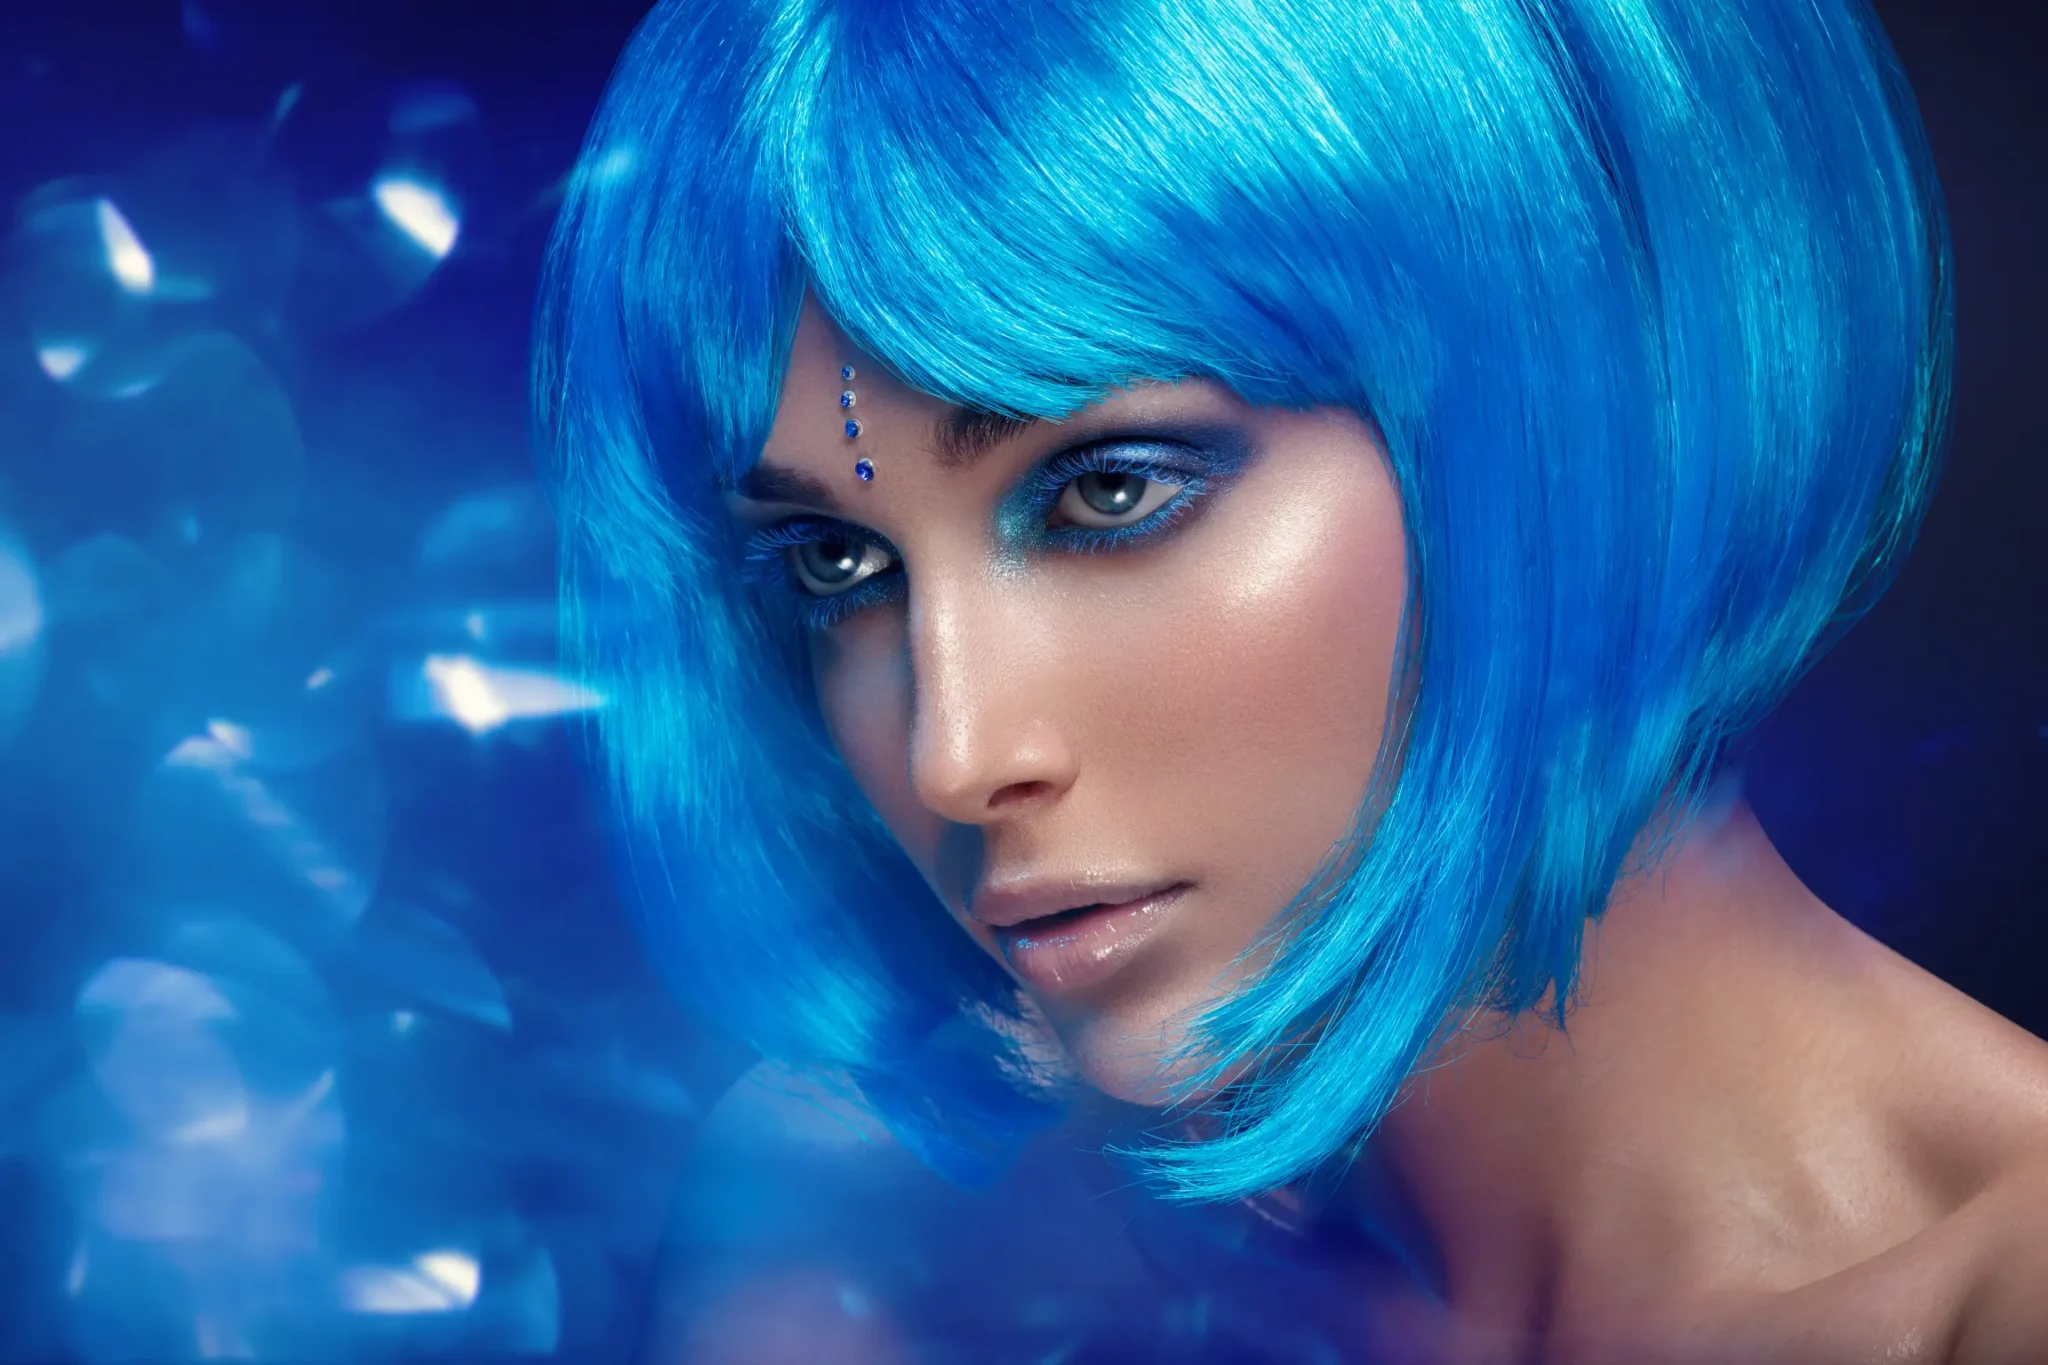 Blaue Perücke - VISAGE Hair & Beauty - Perücken München - Haarteile, Perücken & Microbondings